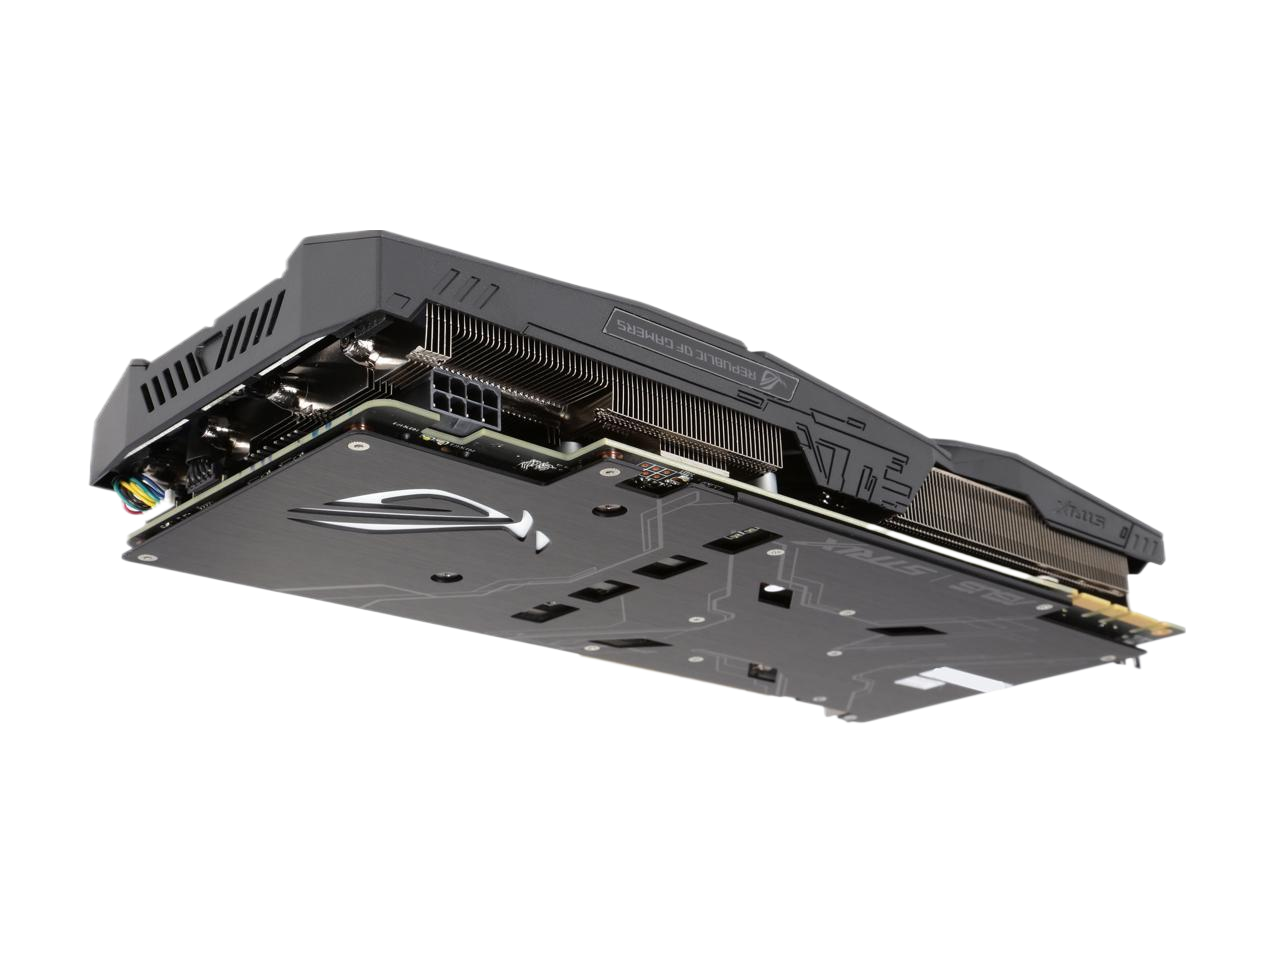 ASUS GeForce GTX 1070 8GB GDDR5 PCI Express 3.0 Video Card STRIX-GTX1070-8G-GAMING